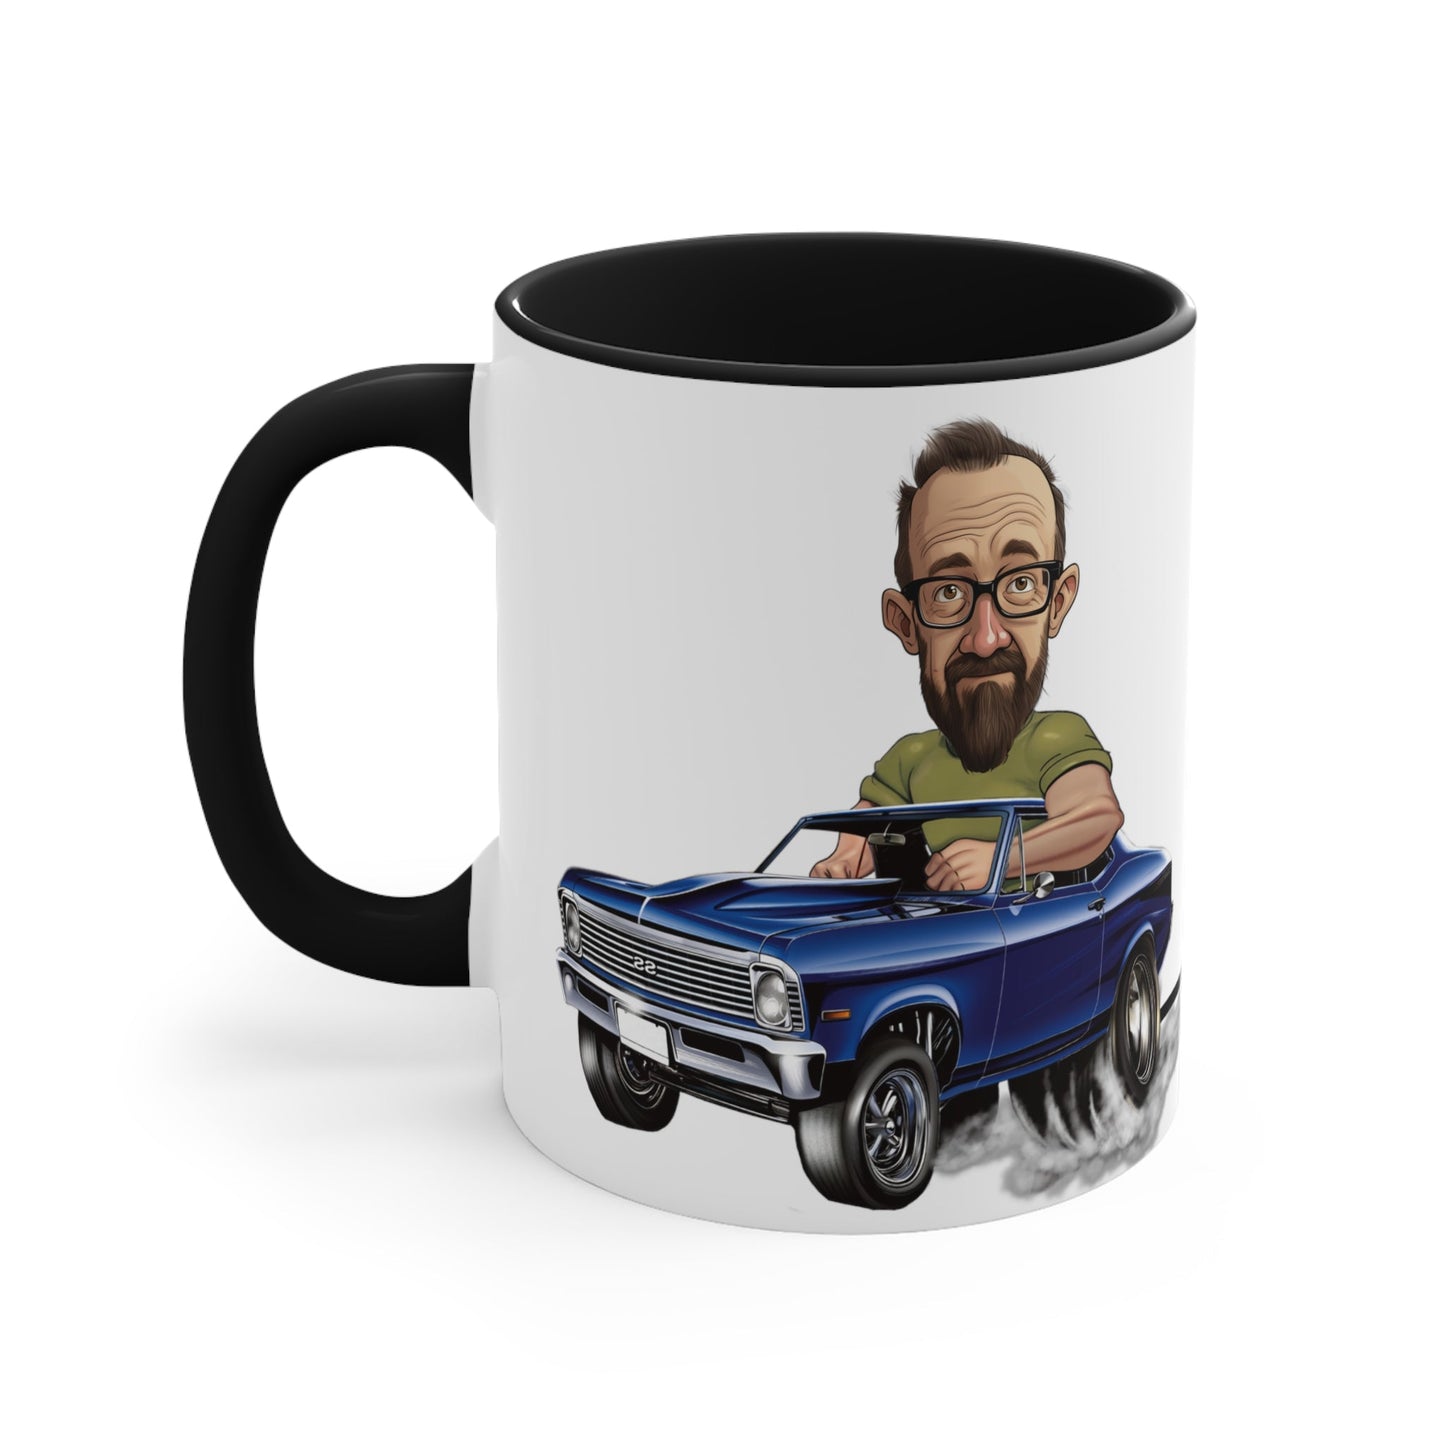 Chevy Nova Coffee Mug Car Caricature From Photo 11oz mug